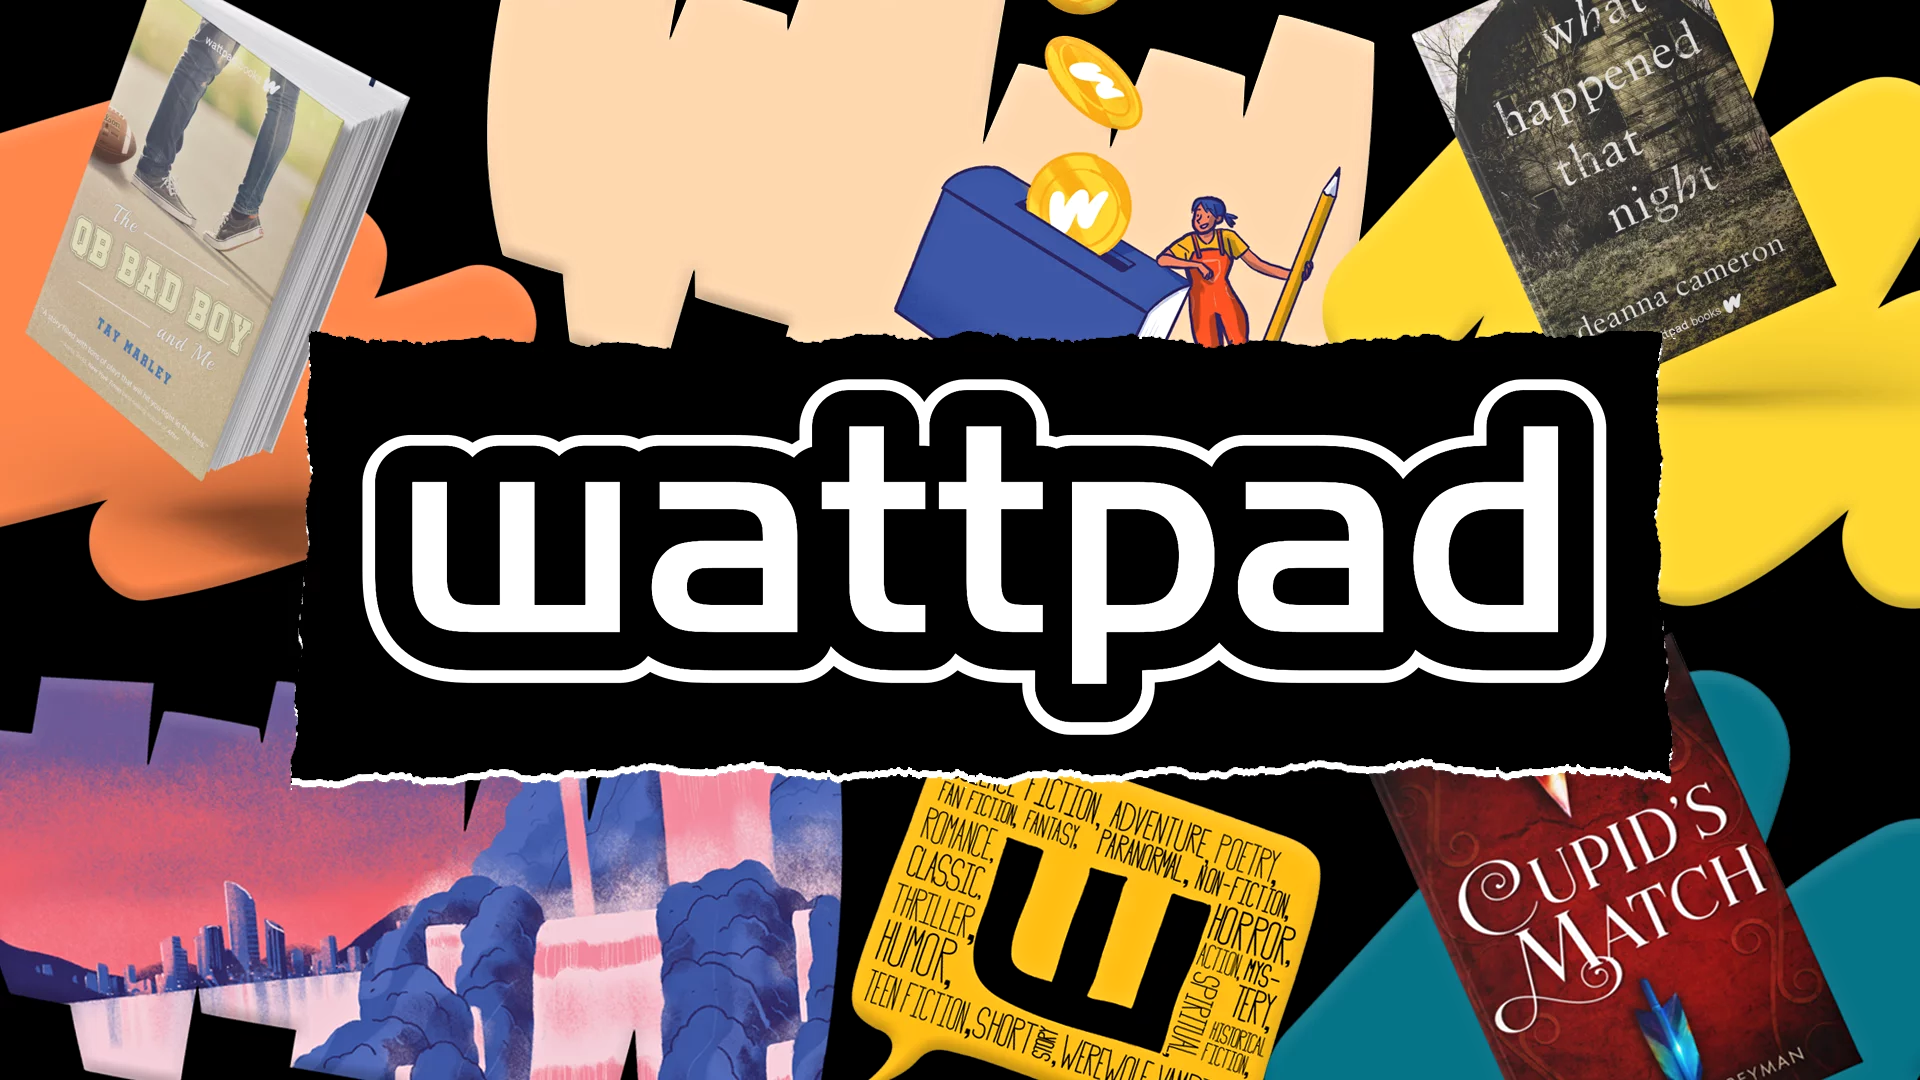 Wattpad scraps ‘Paid Stories’ for better balanced freemium model